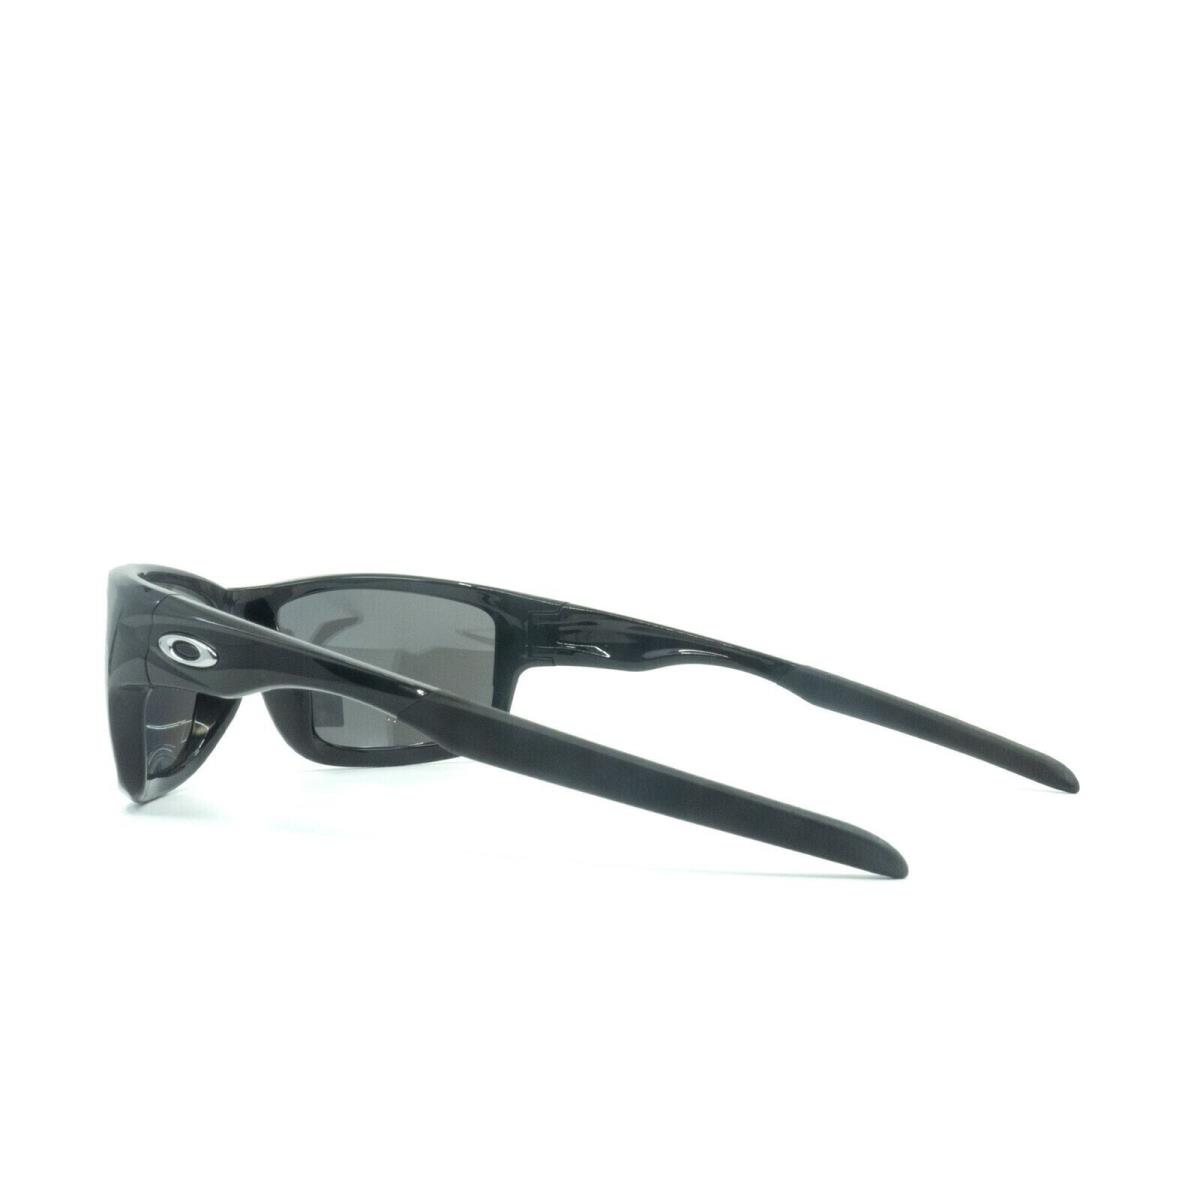 Oakley sunglasses Canteen - Black Frame, Black Lens 1